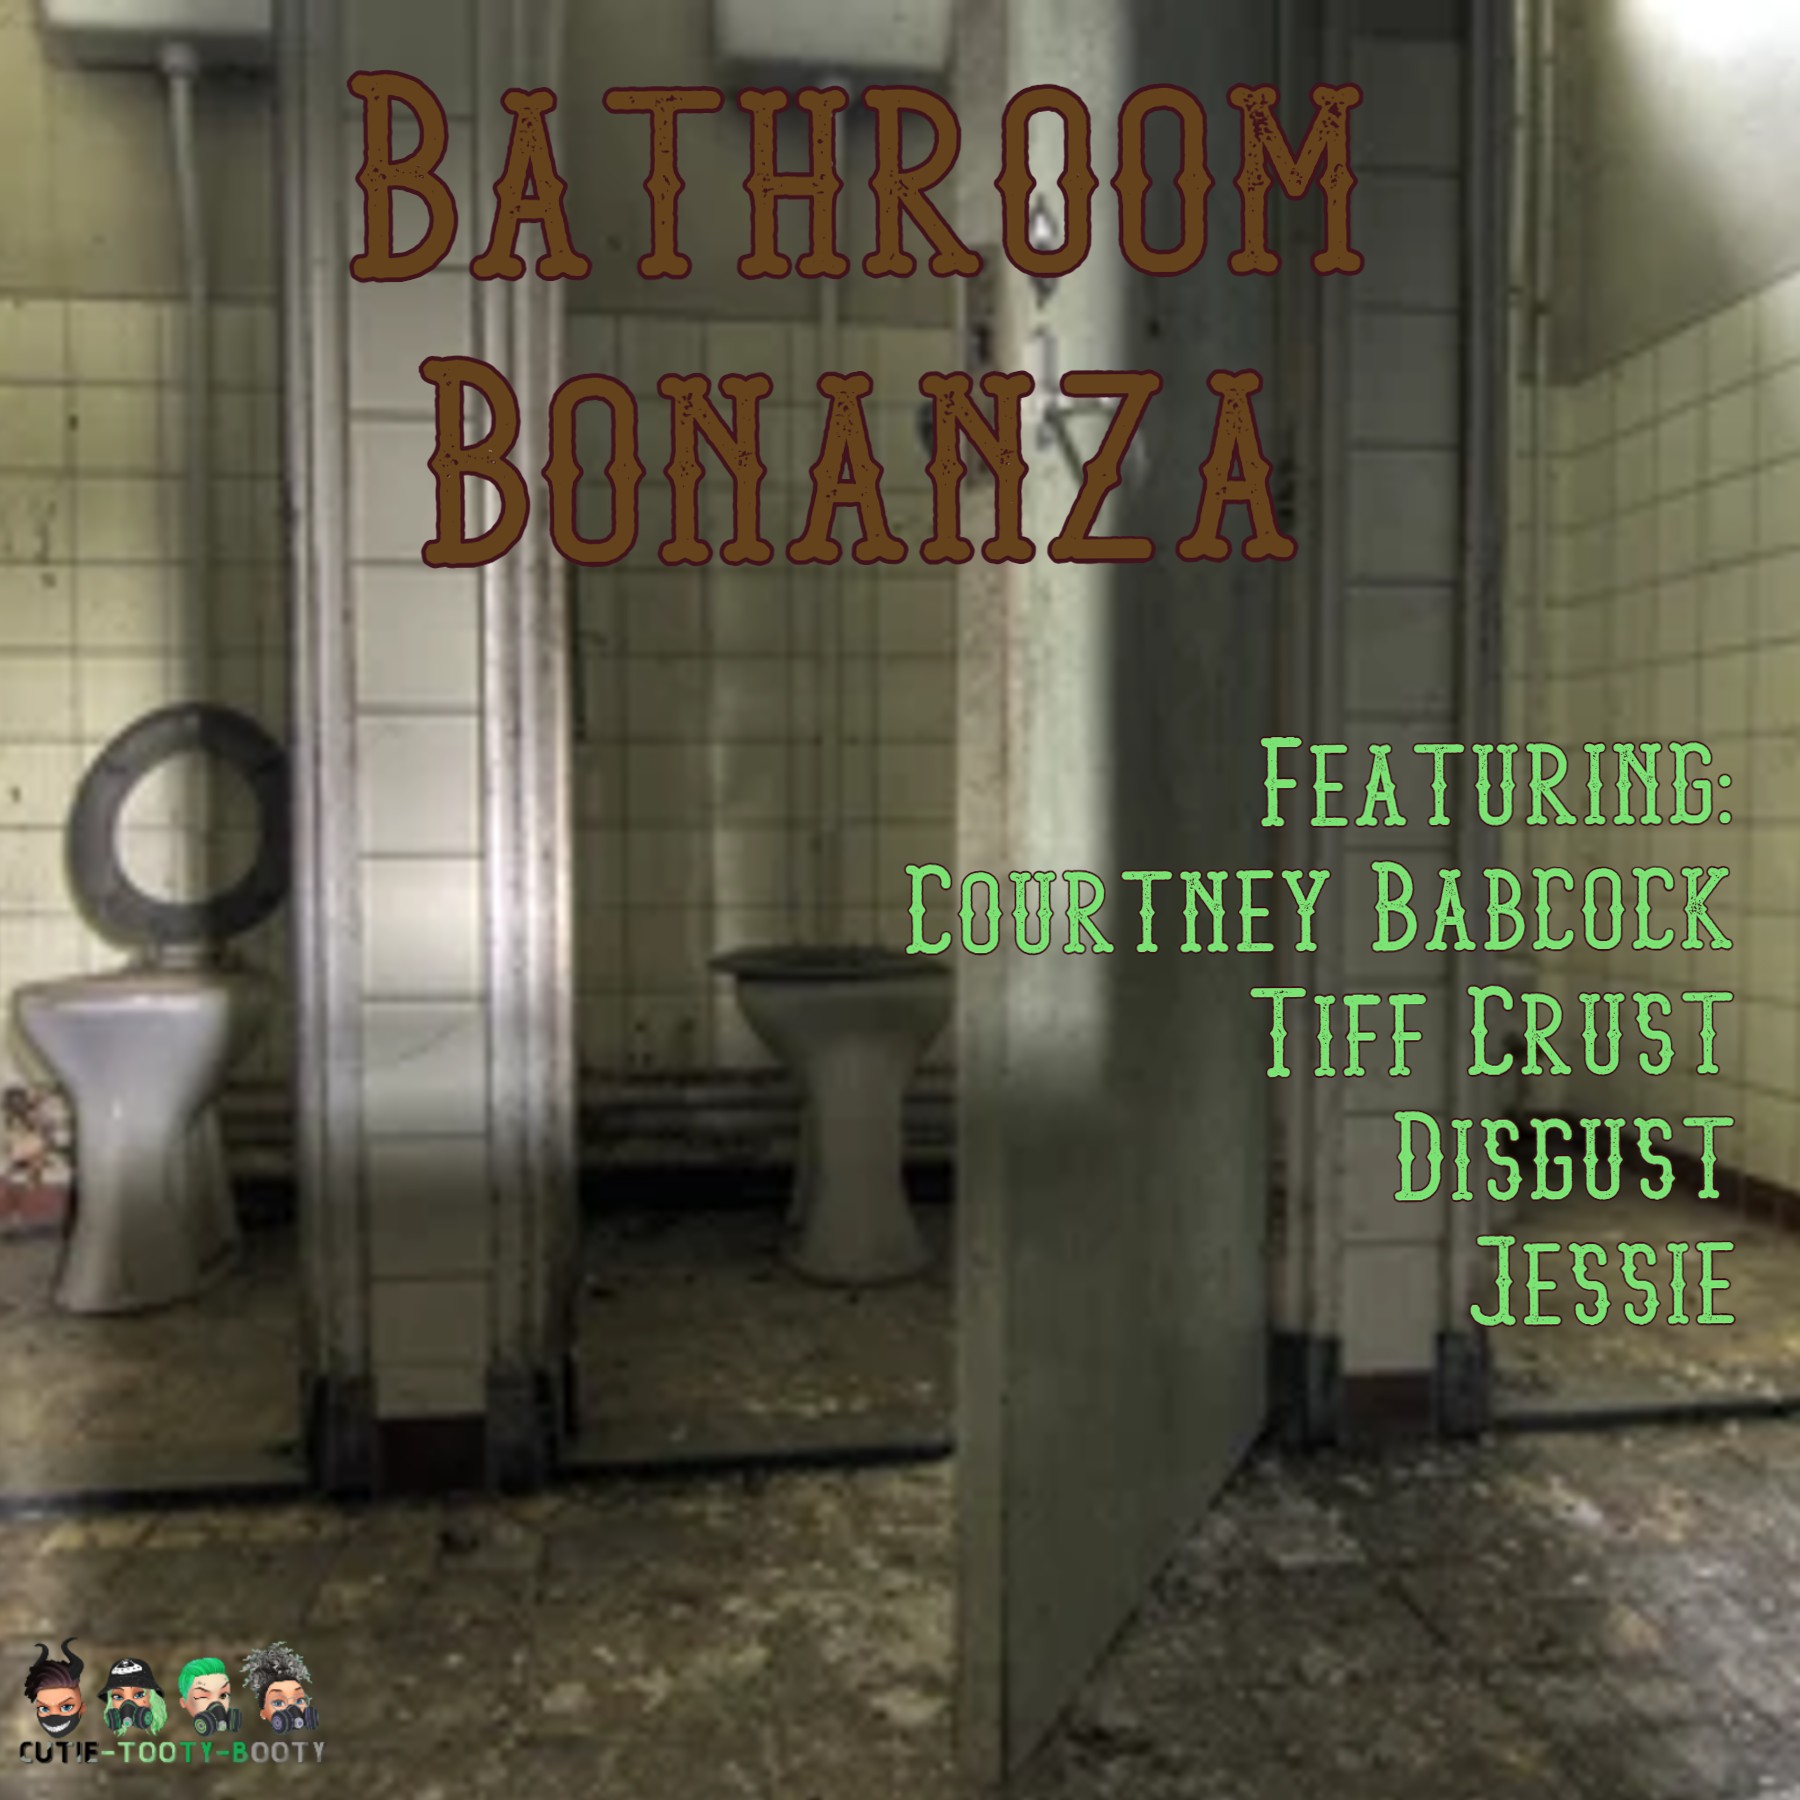 Bathroom Bonanza